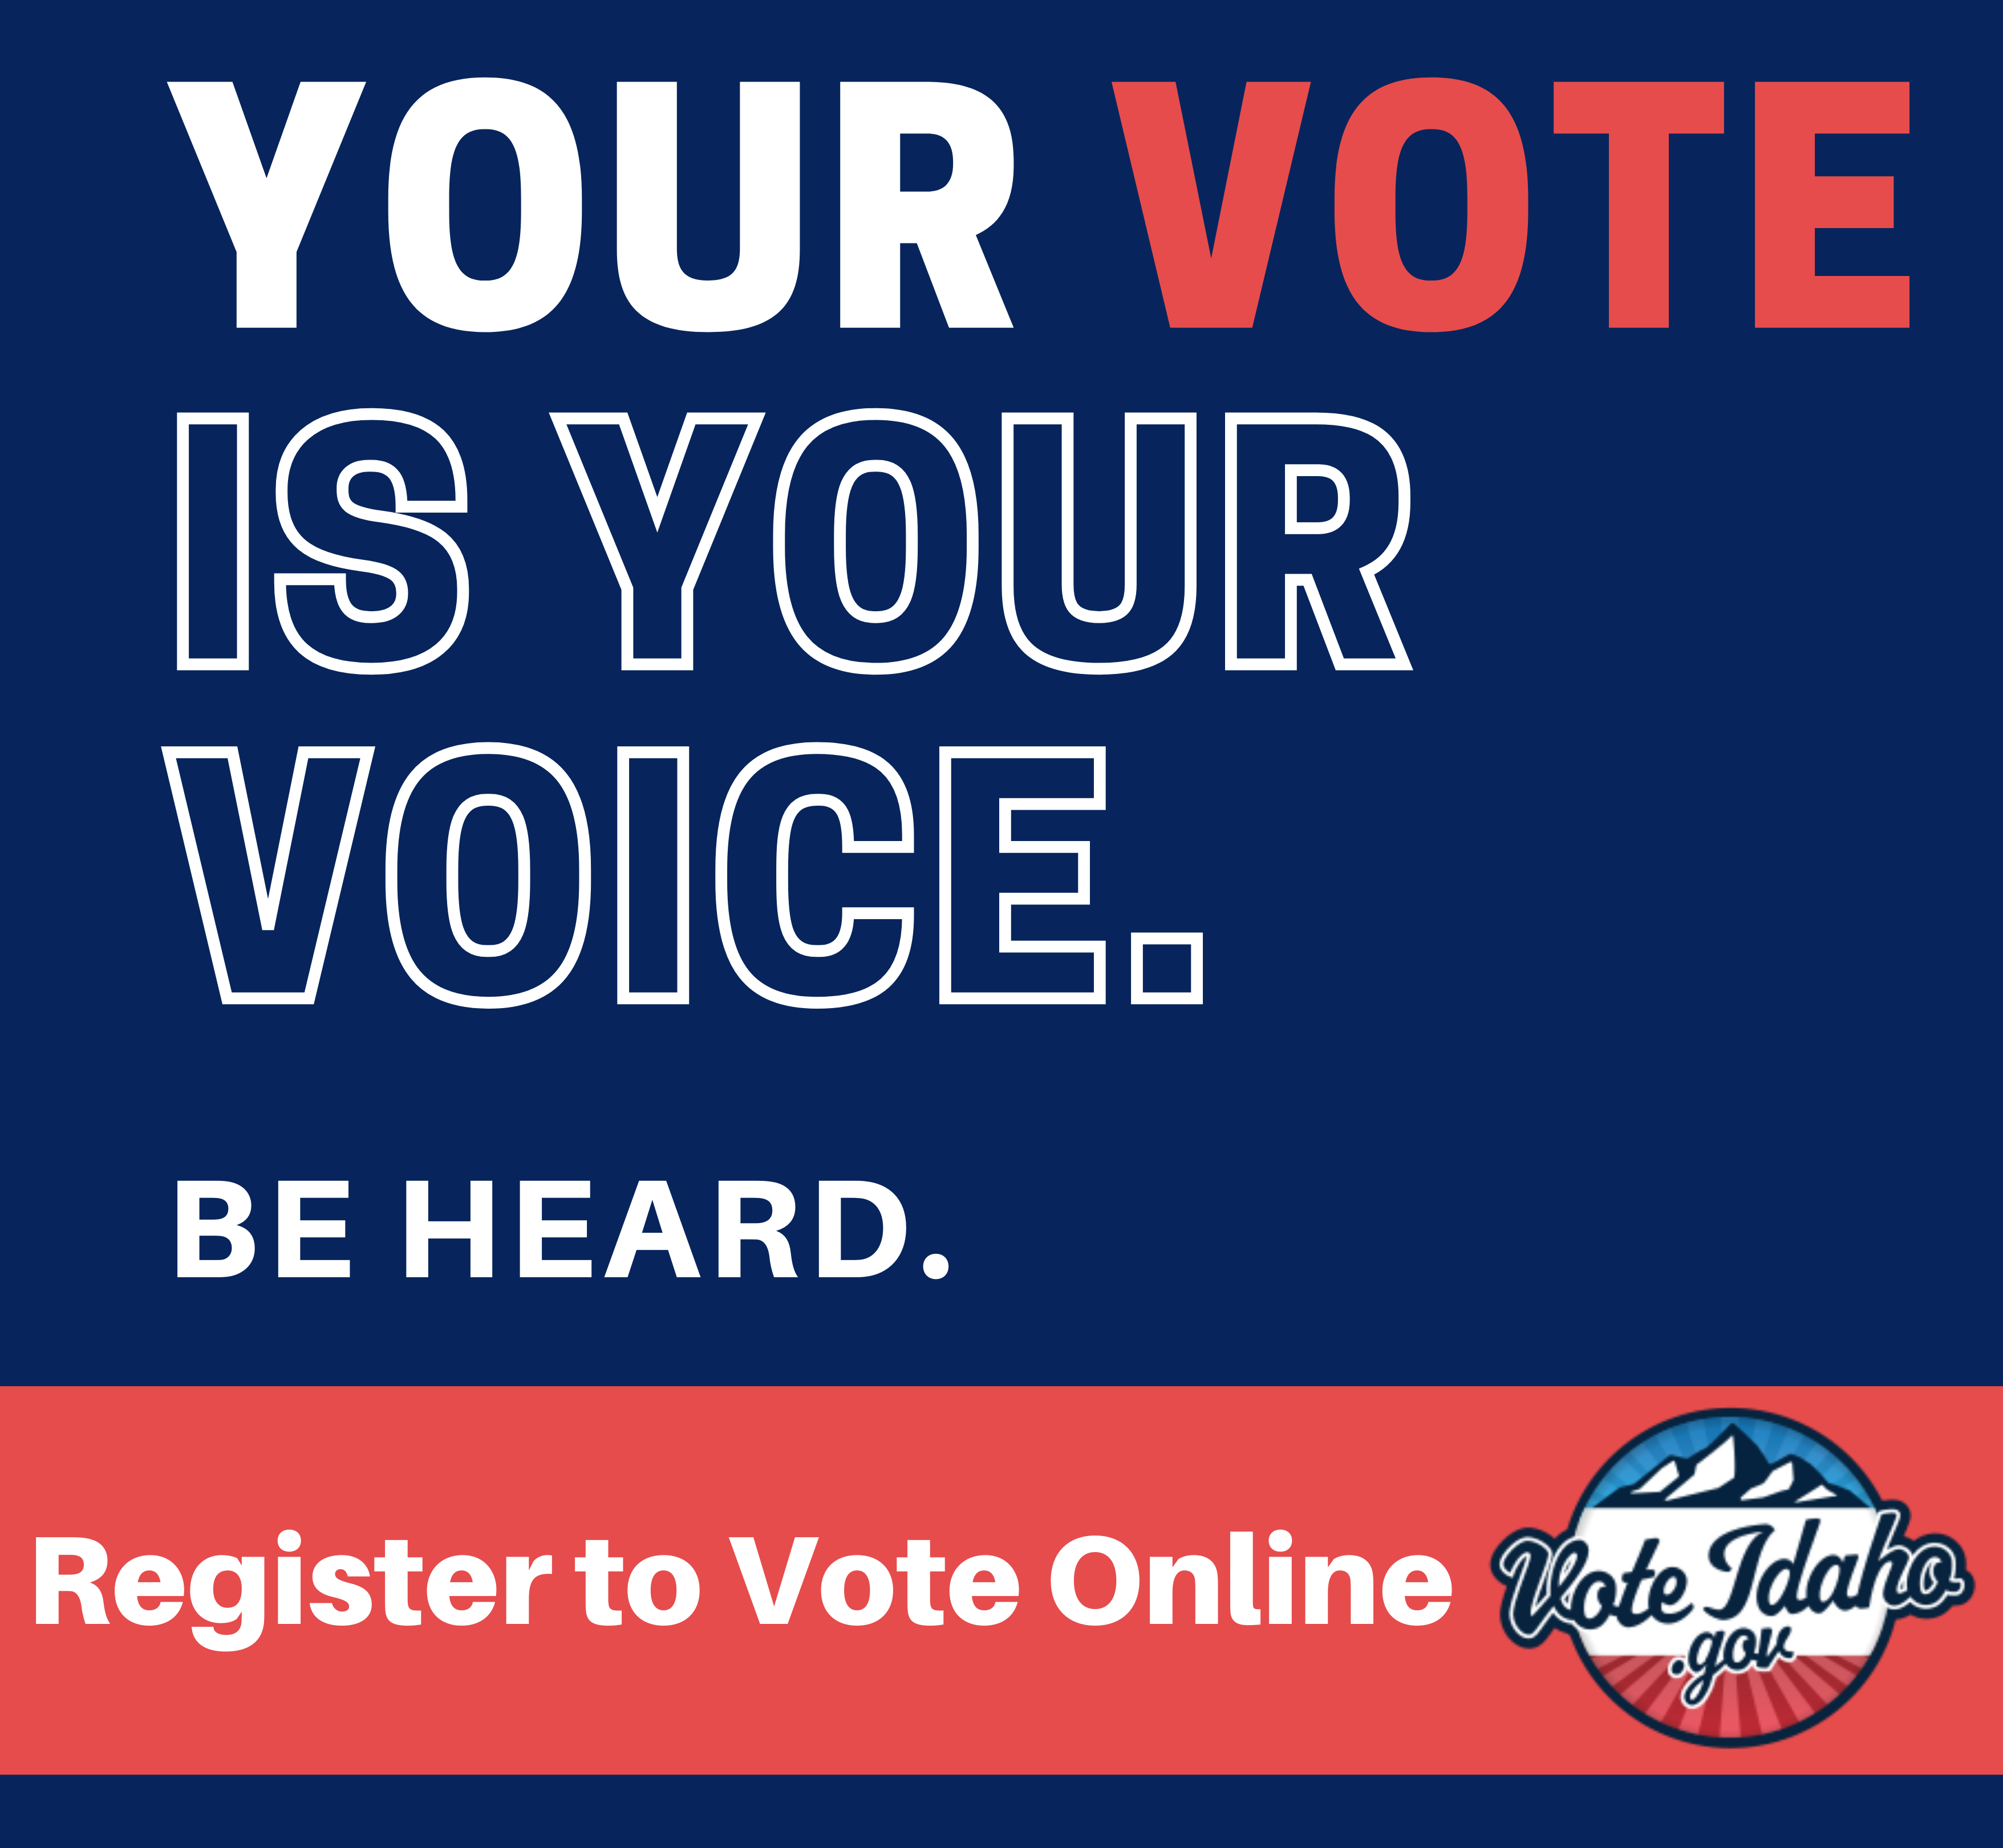 Your Vote is Your Voice Be Heard Register to Vote Online Vote Idaho.gov